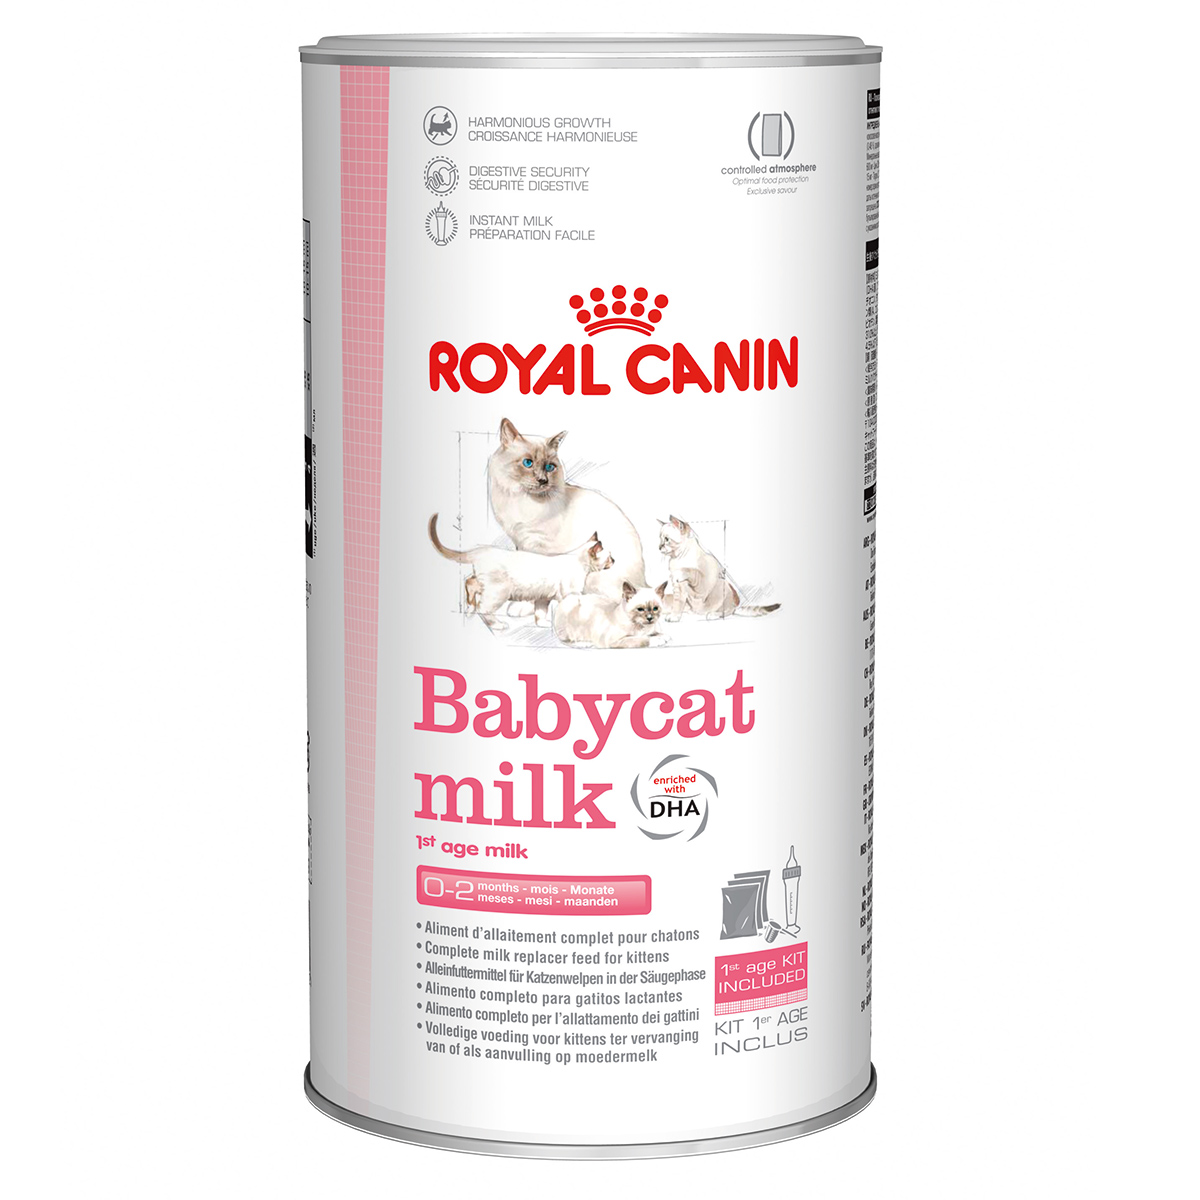 Royal Canin Babycat Milk 300 g imagine